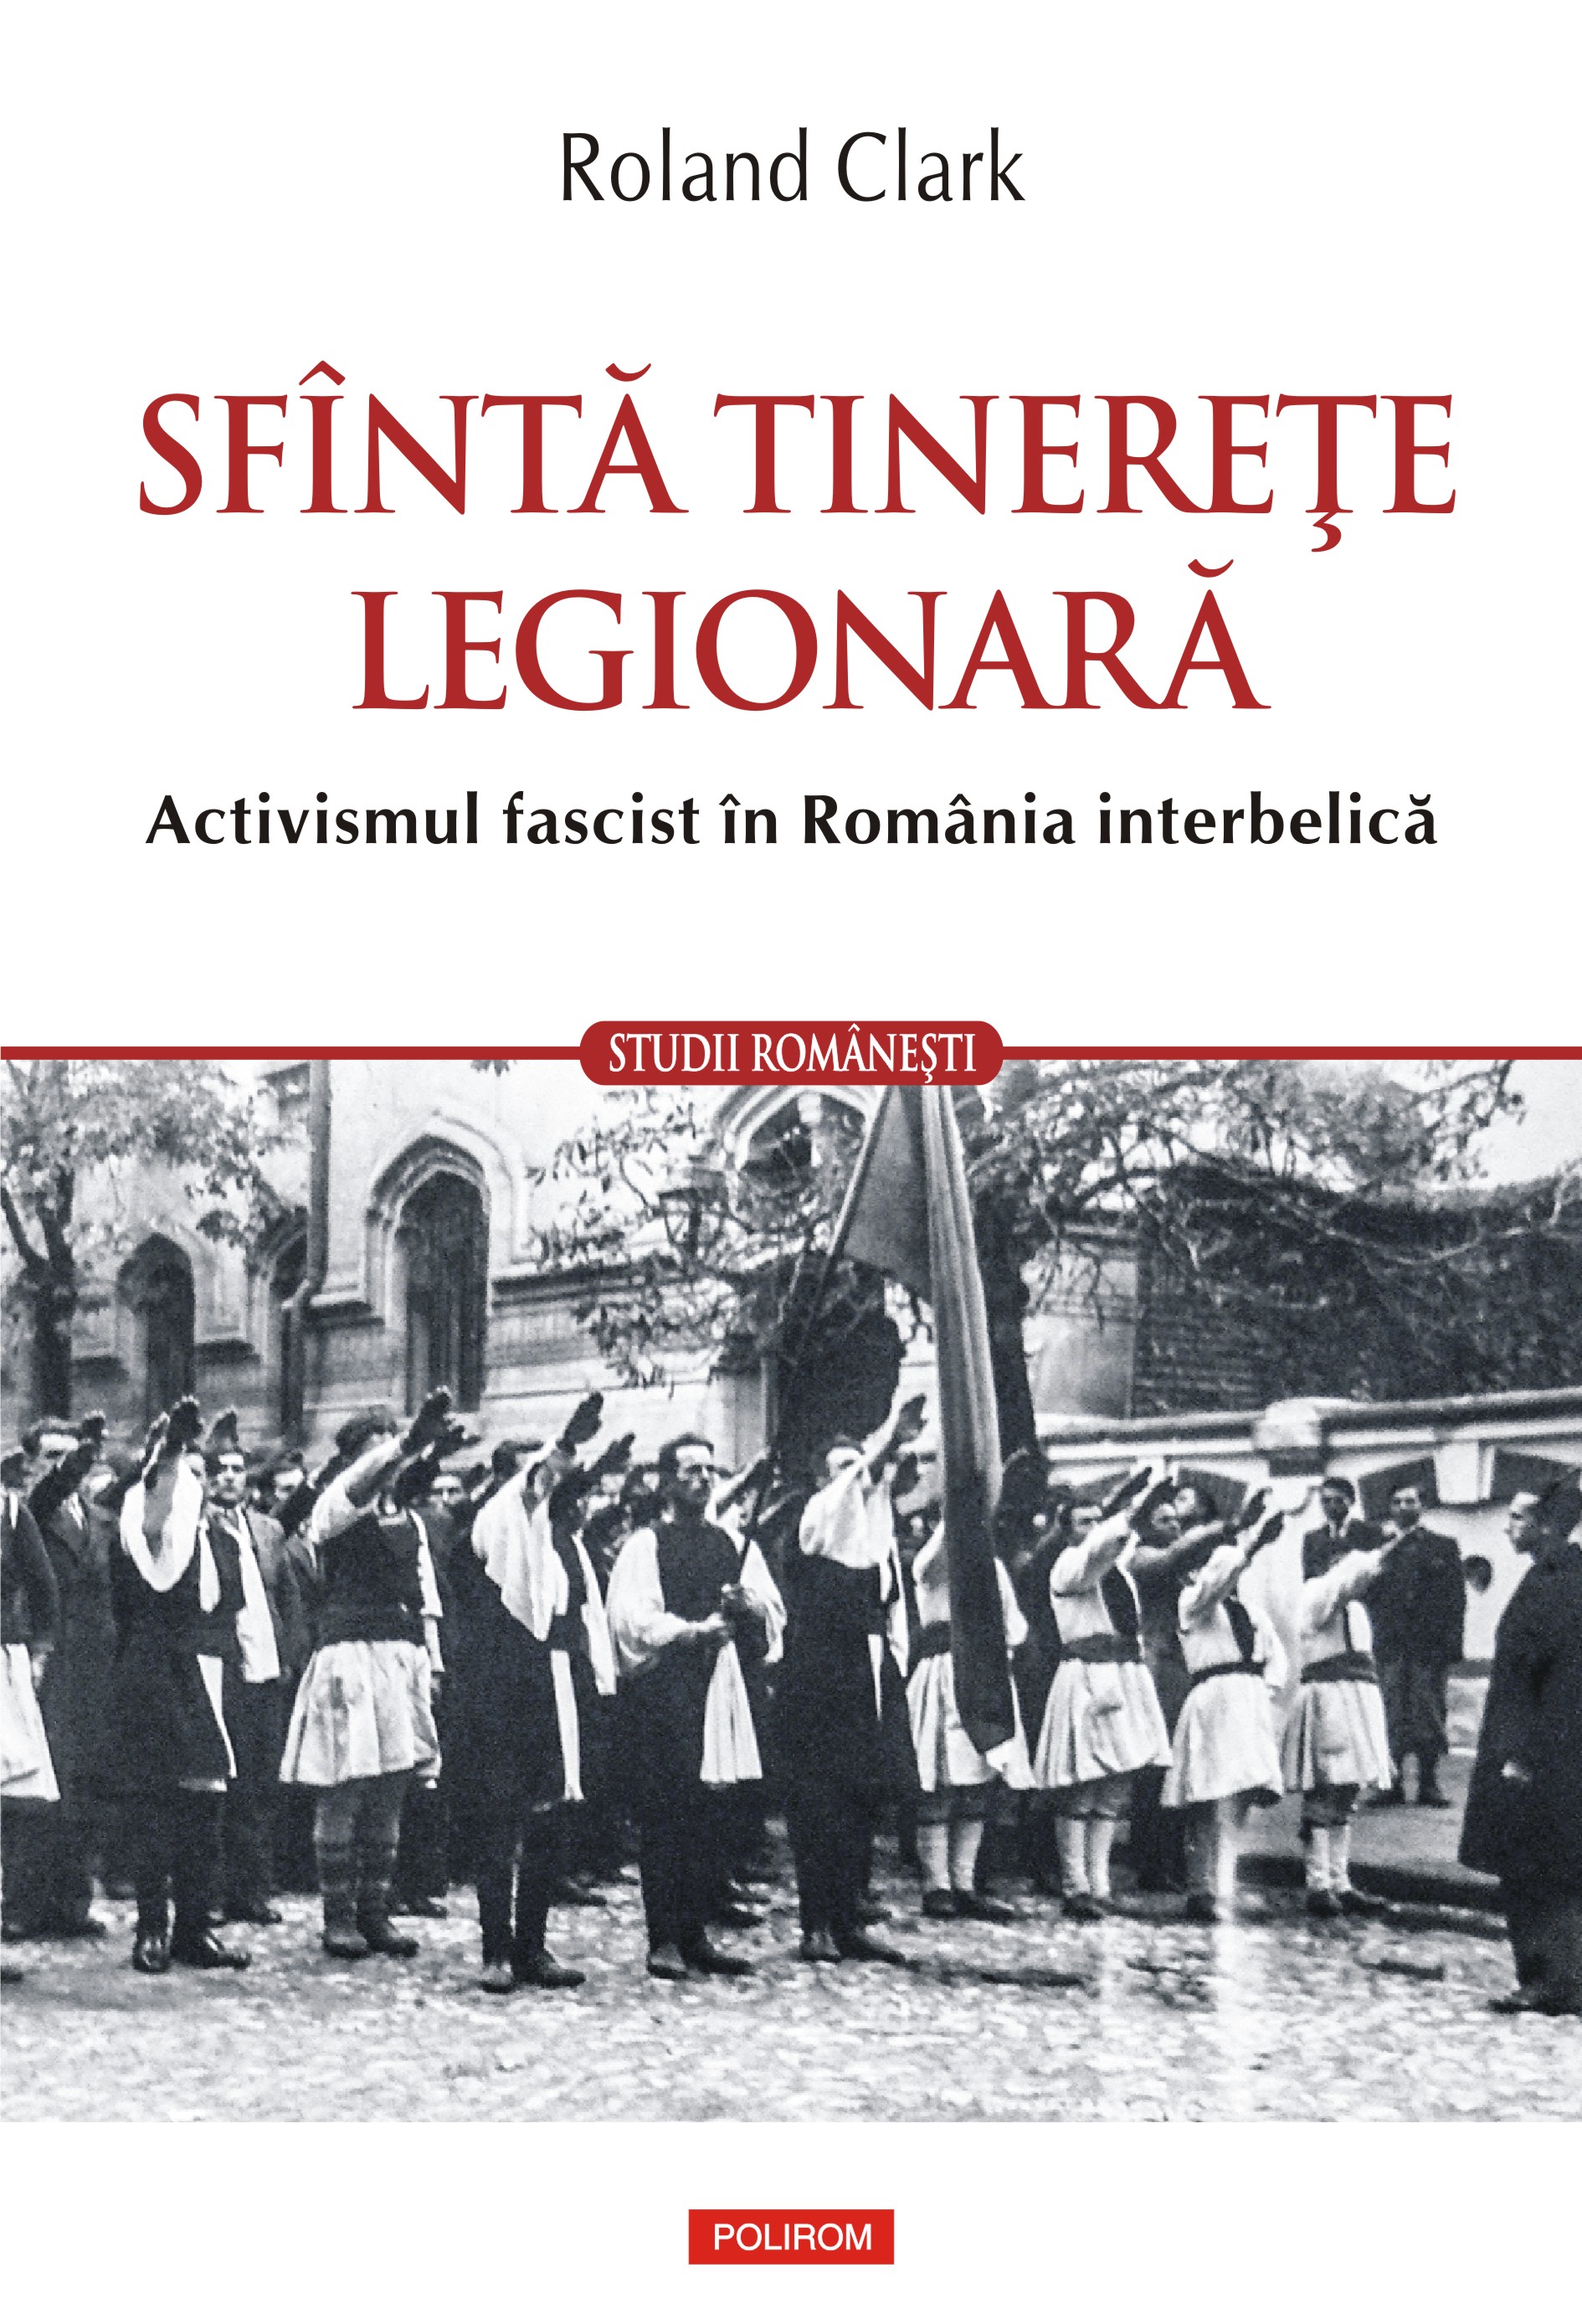 eBook Sfinta tinerete legionara. Activismul fascist in Romania interbelica - Roland Clark